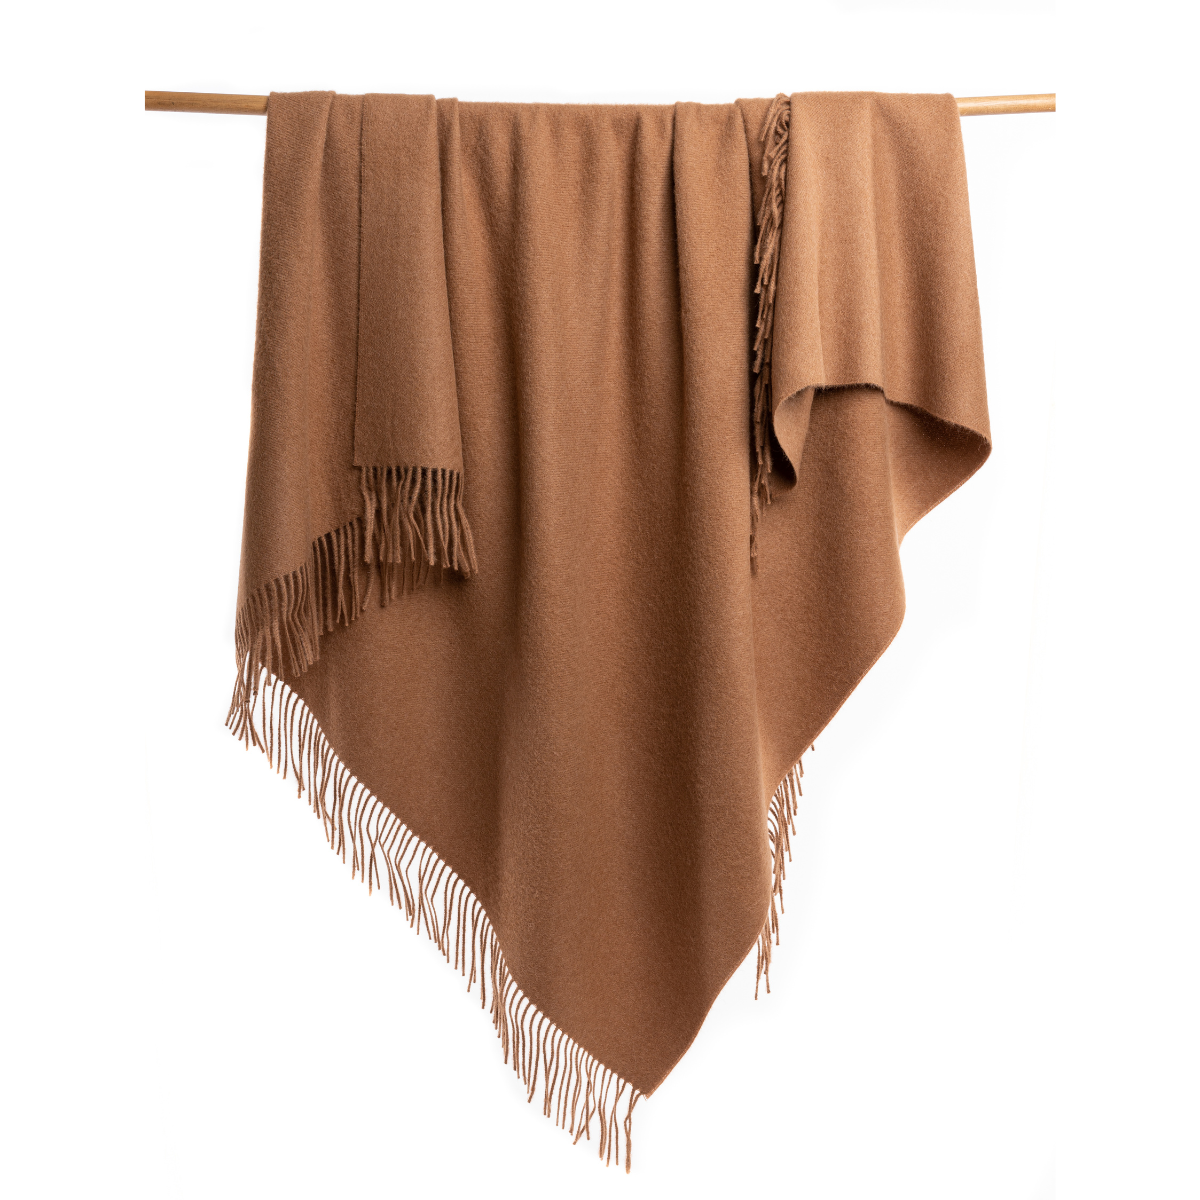 An Alpacas of Montana soft cozy luxury warm gingerbread brown blanket with a tasseled edge.